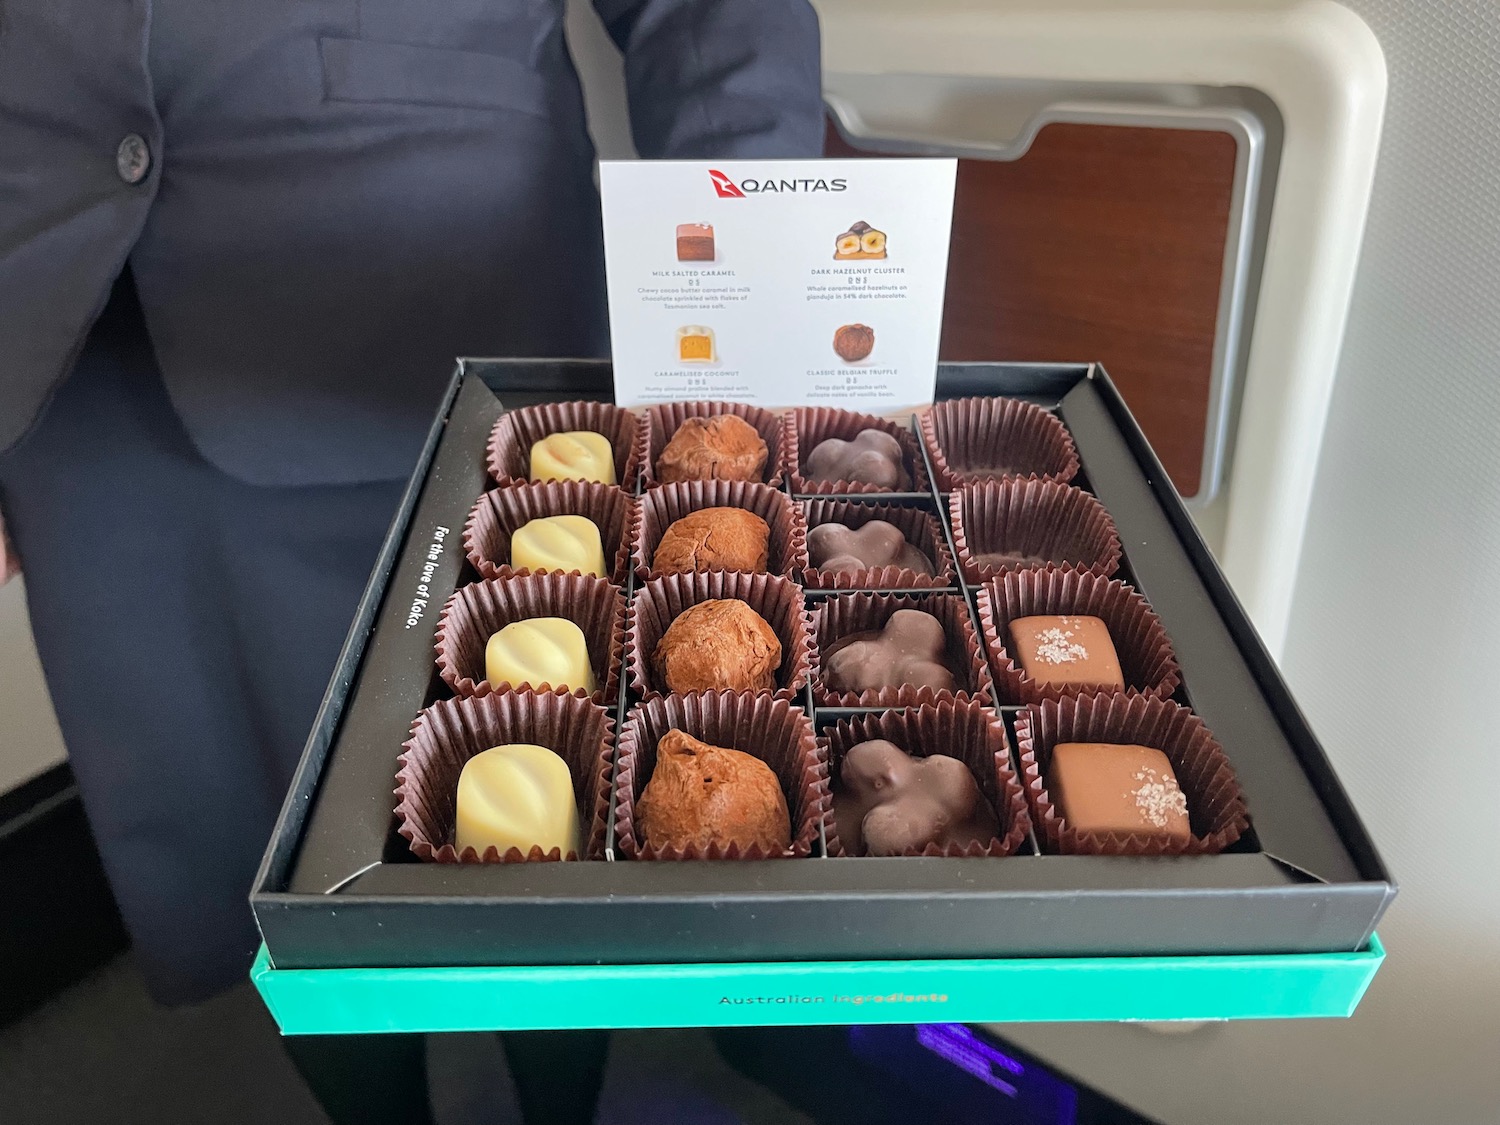 a box of chocolates on a plane